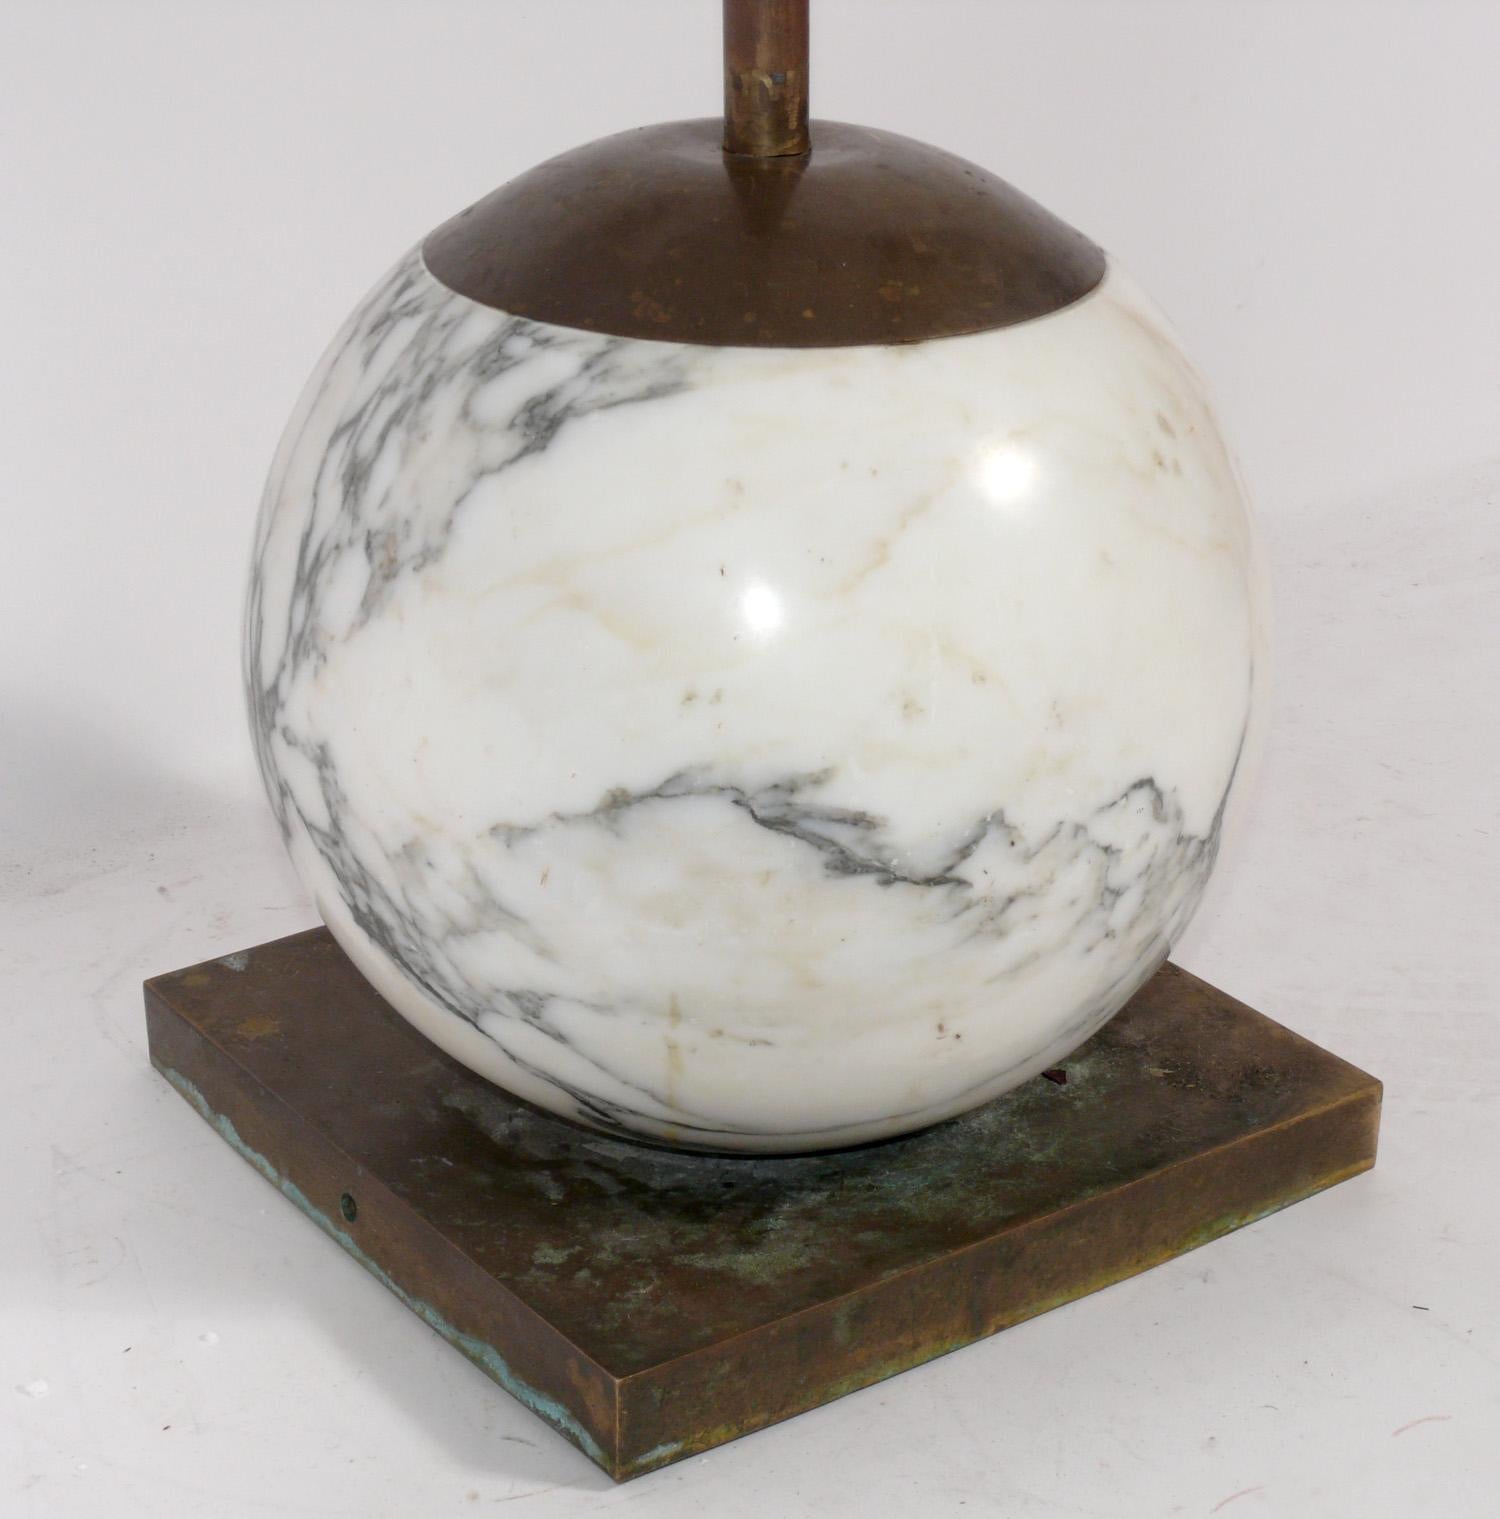 marble ball lamp